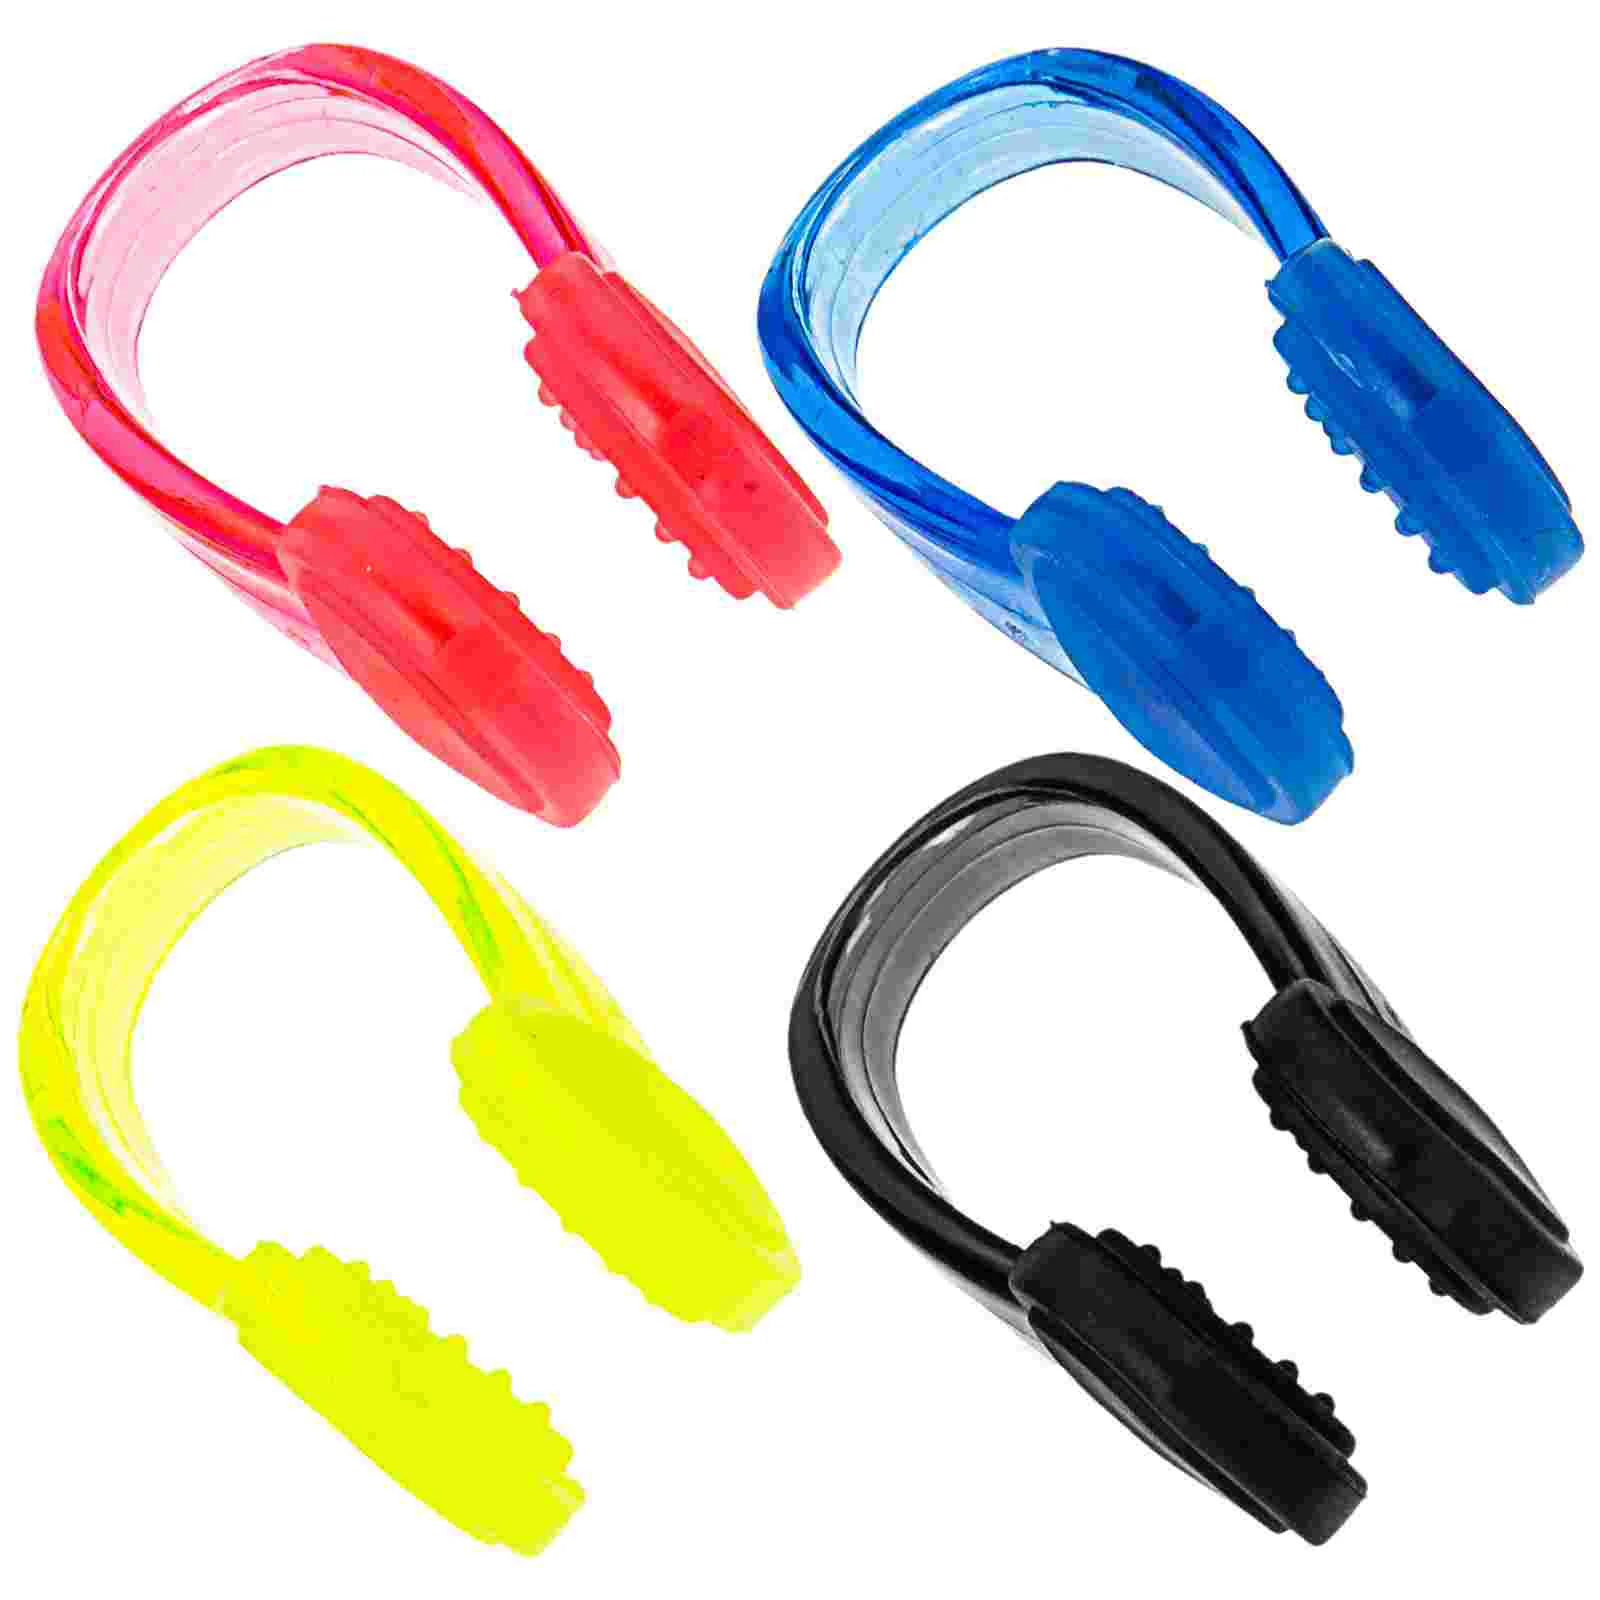 

4 Pcs Swimming Nose Clip Convenient Clips Soft Portable Plugs Swimmer Accessory Silica Gel Clamps Child